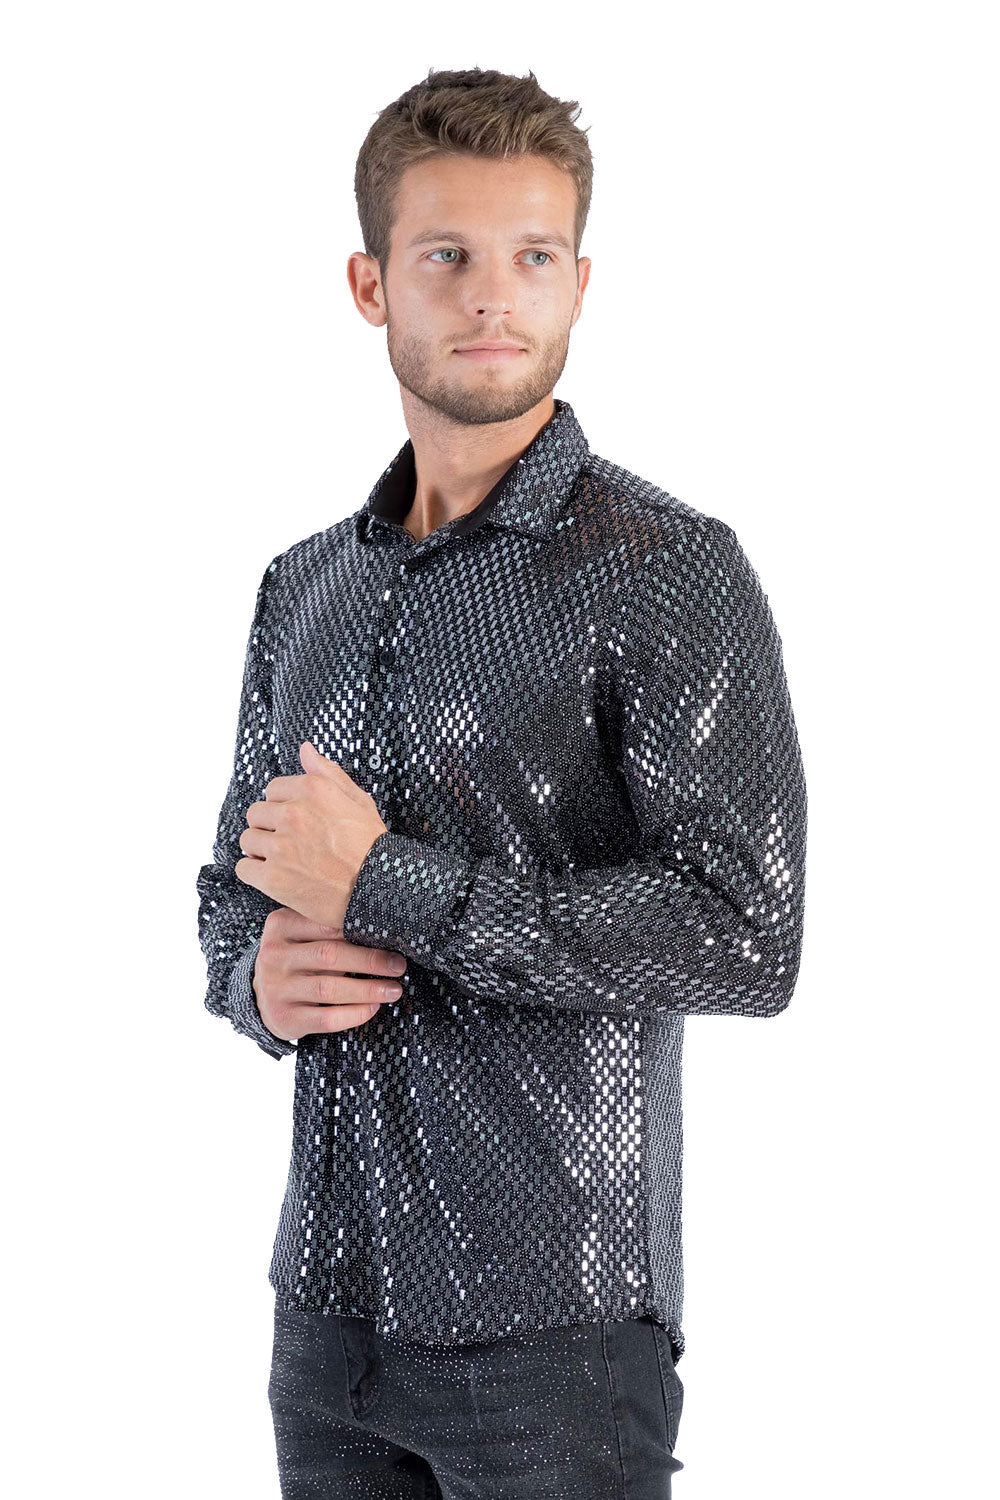 BARABAS Men's Shiny Sparkly Geometric Design Button Down Shirt B300 Balck